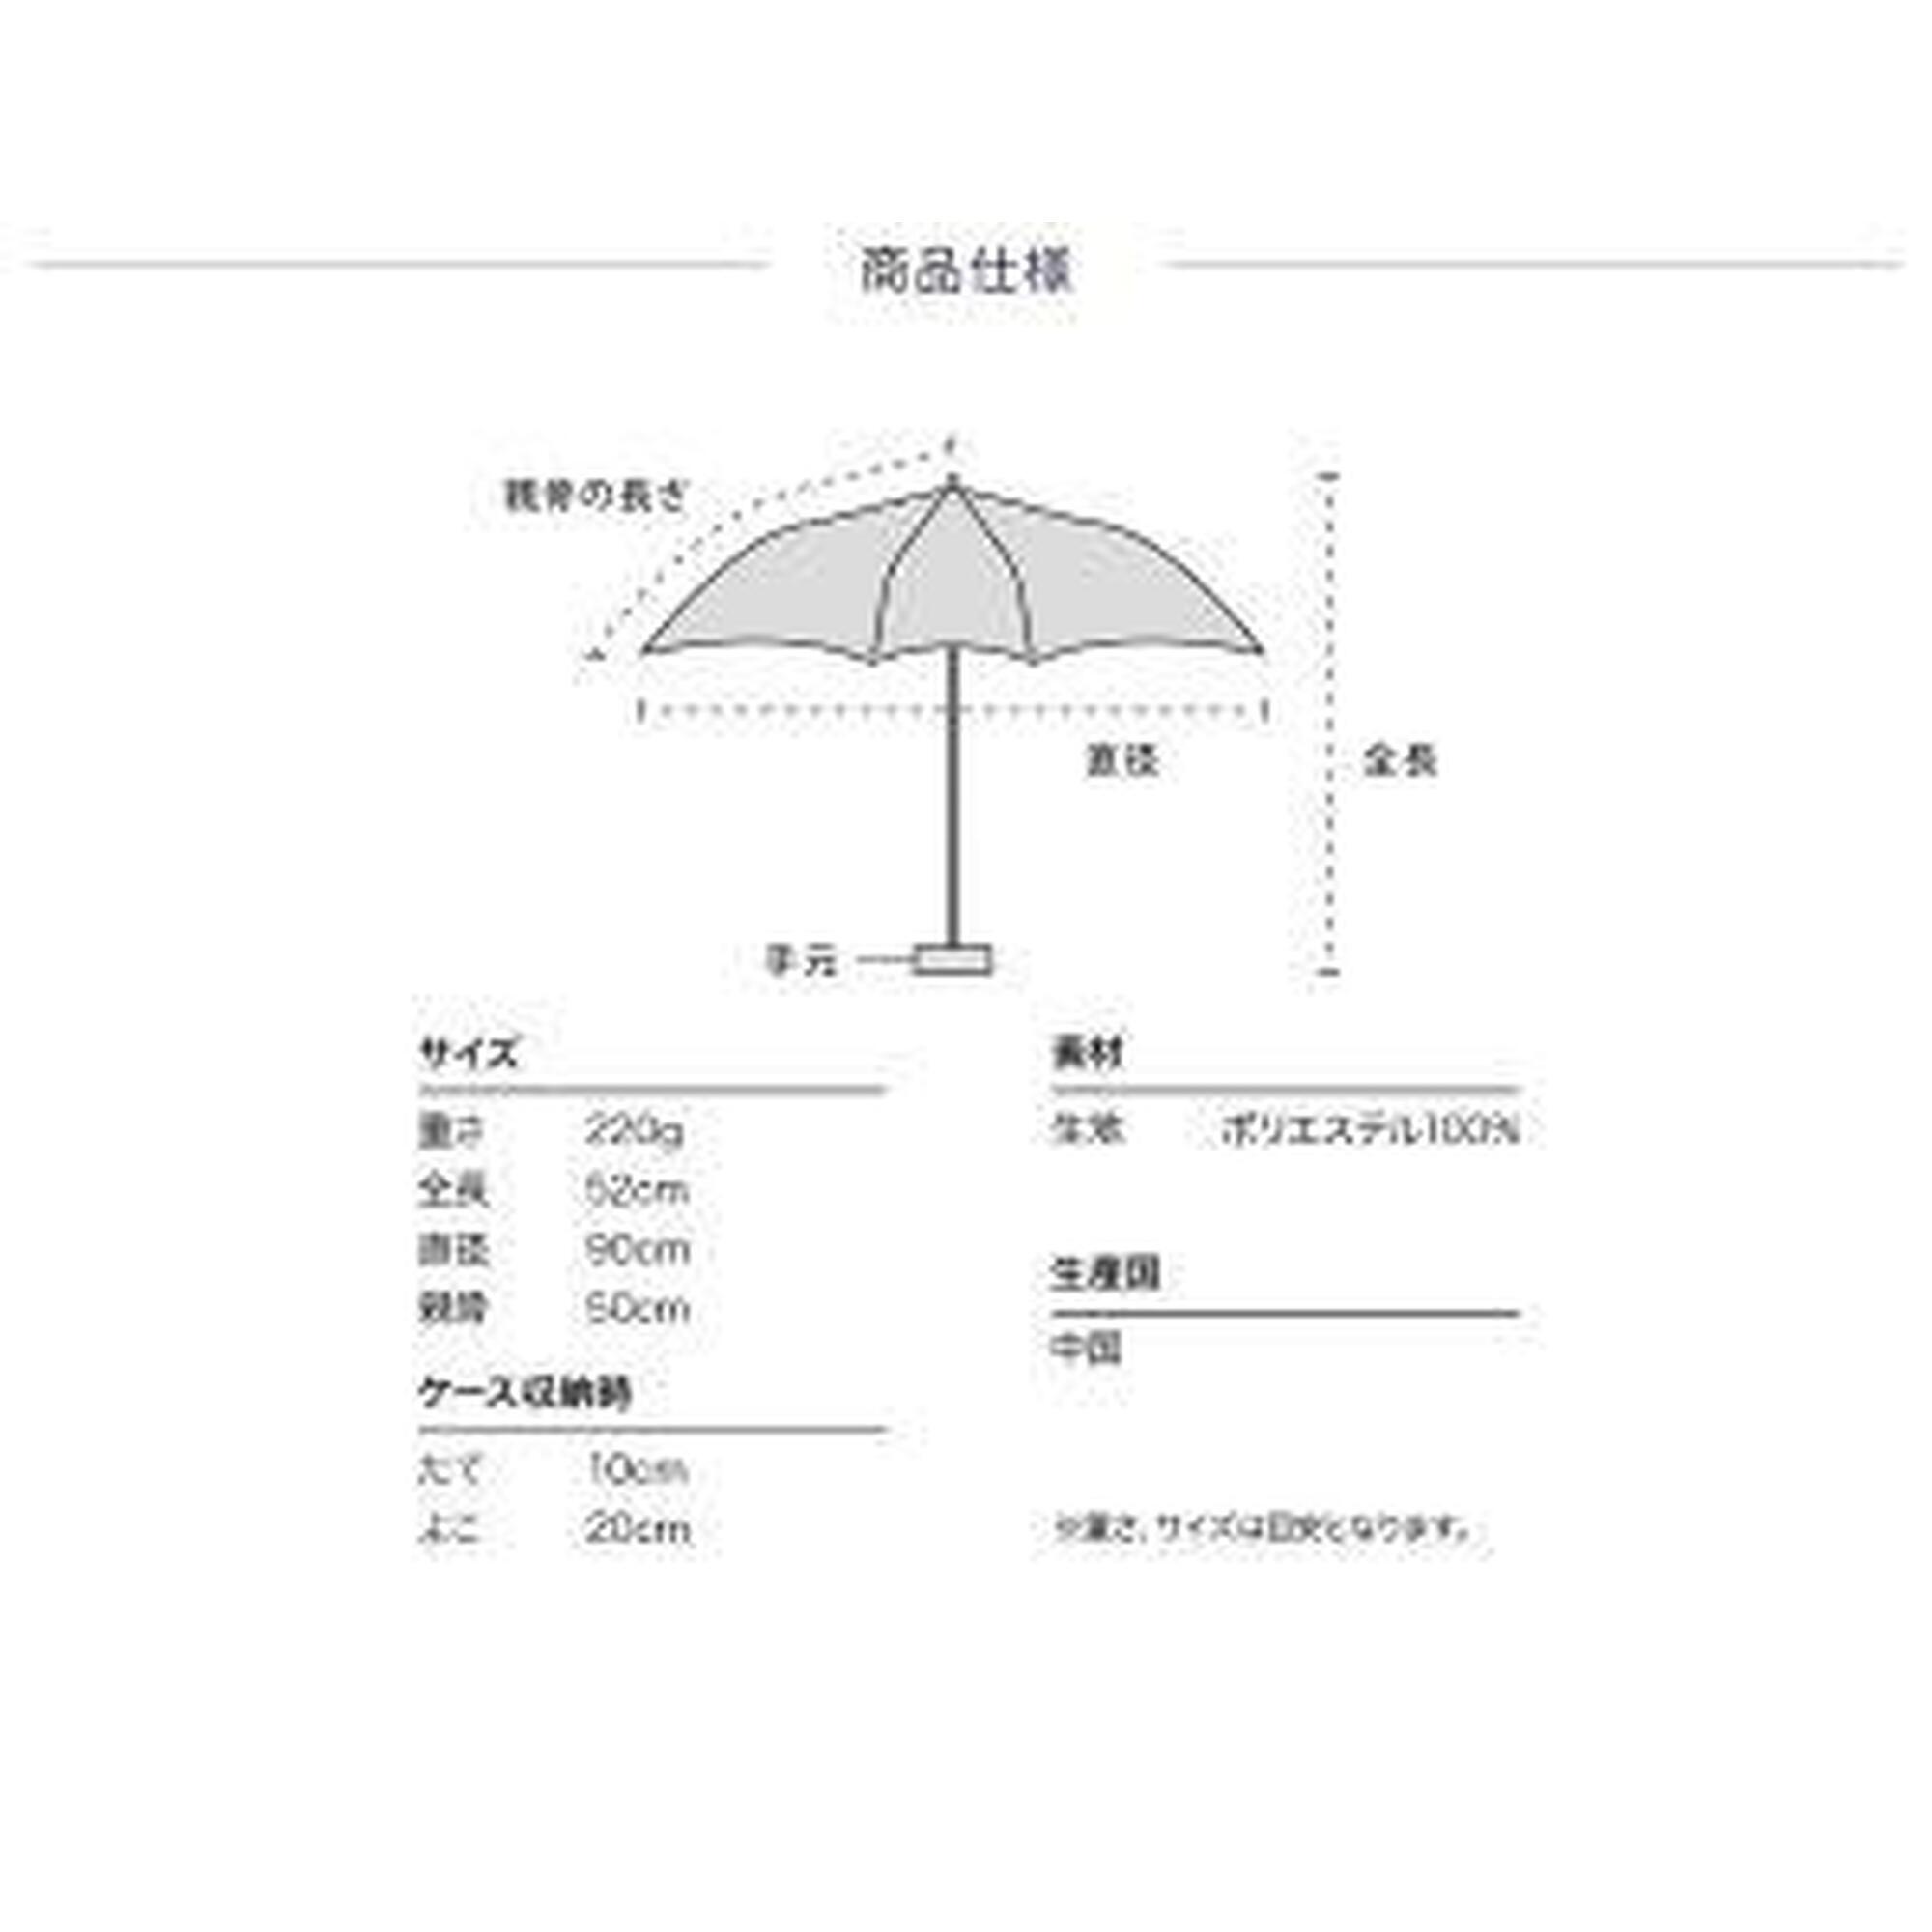 Blush & Bloom Mini Foldable Umbrella - Light Grey